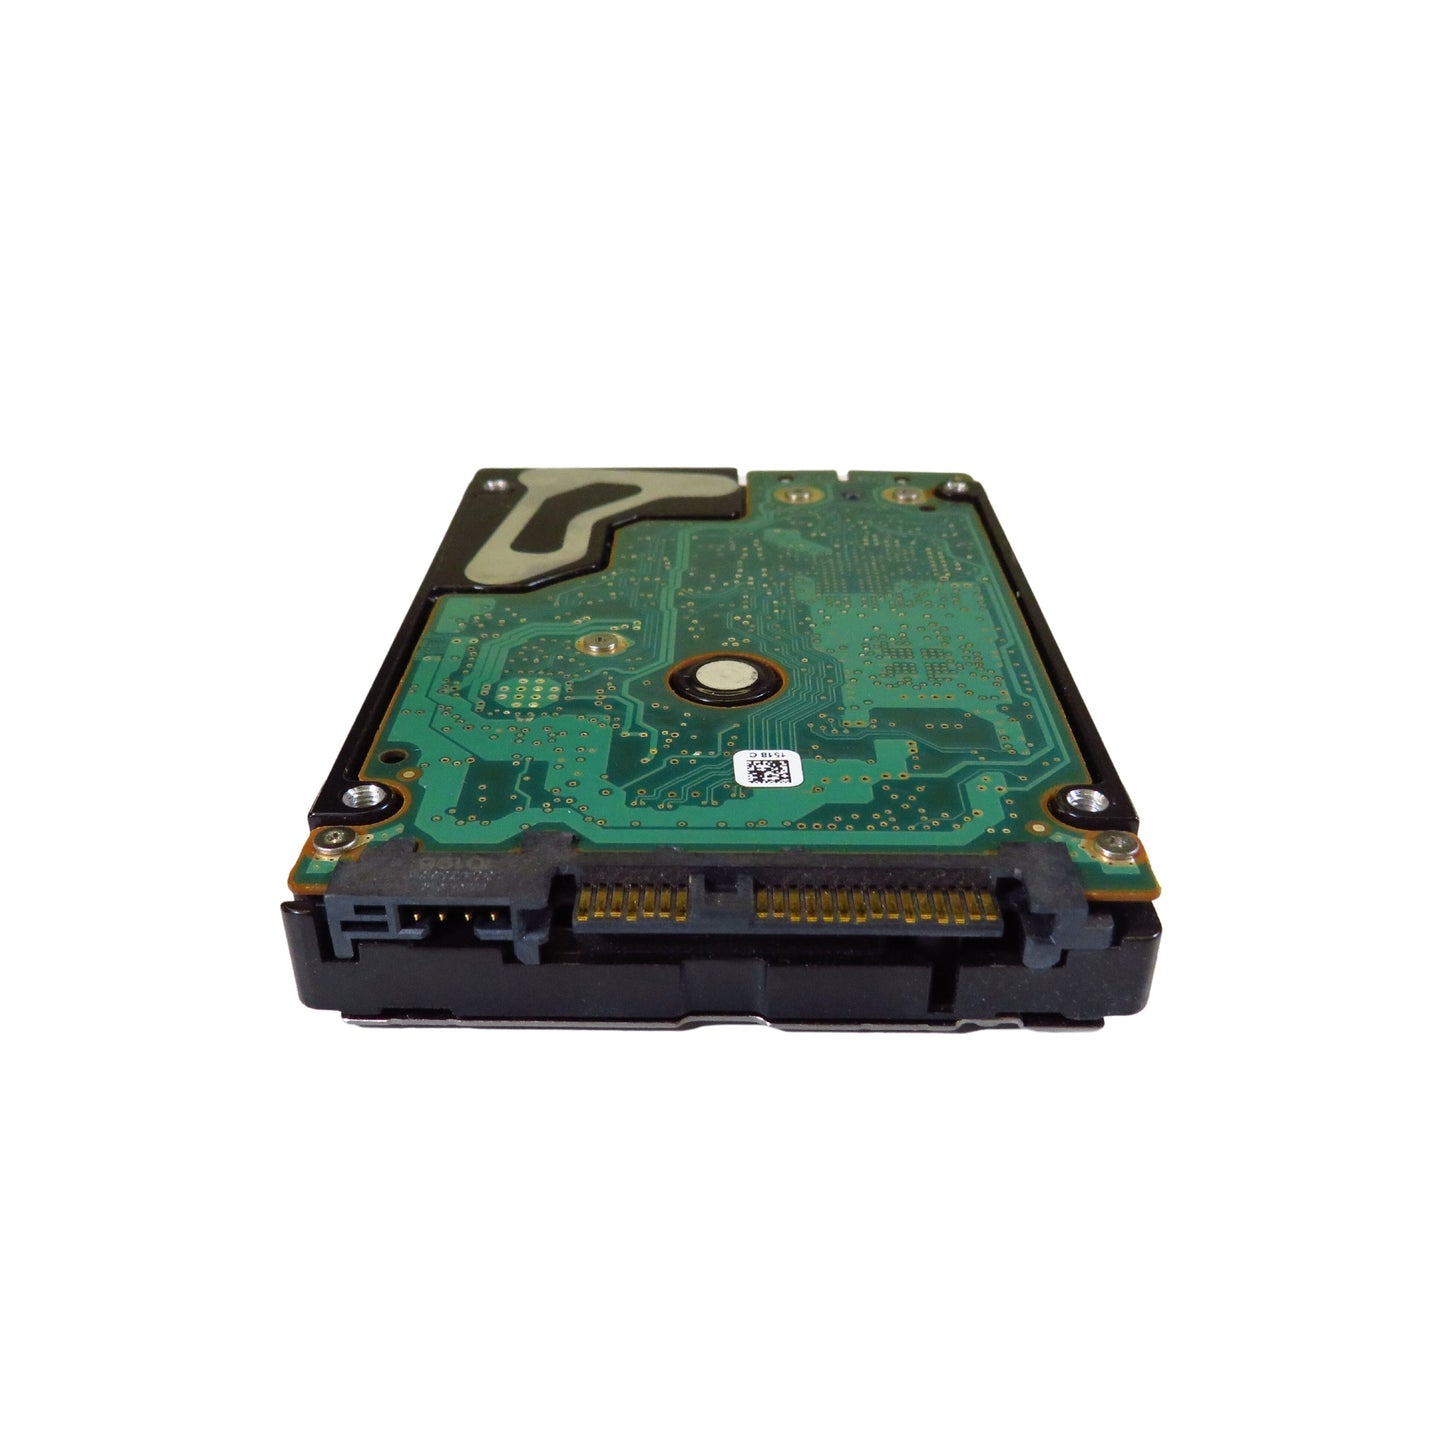 Seagate ST9450404SS 450GB 10K RPM 2.5" SAS 6Gbps HDD Hard Drive (Refurbished)